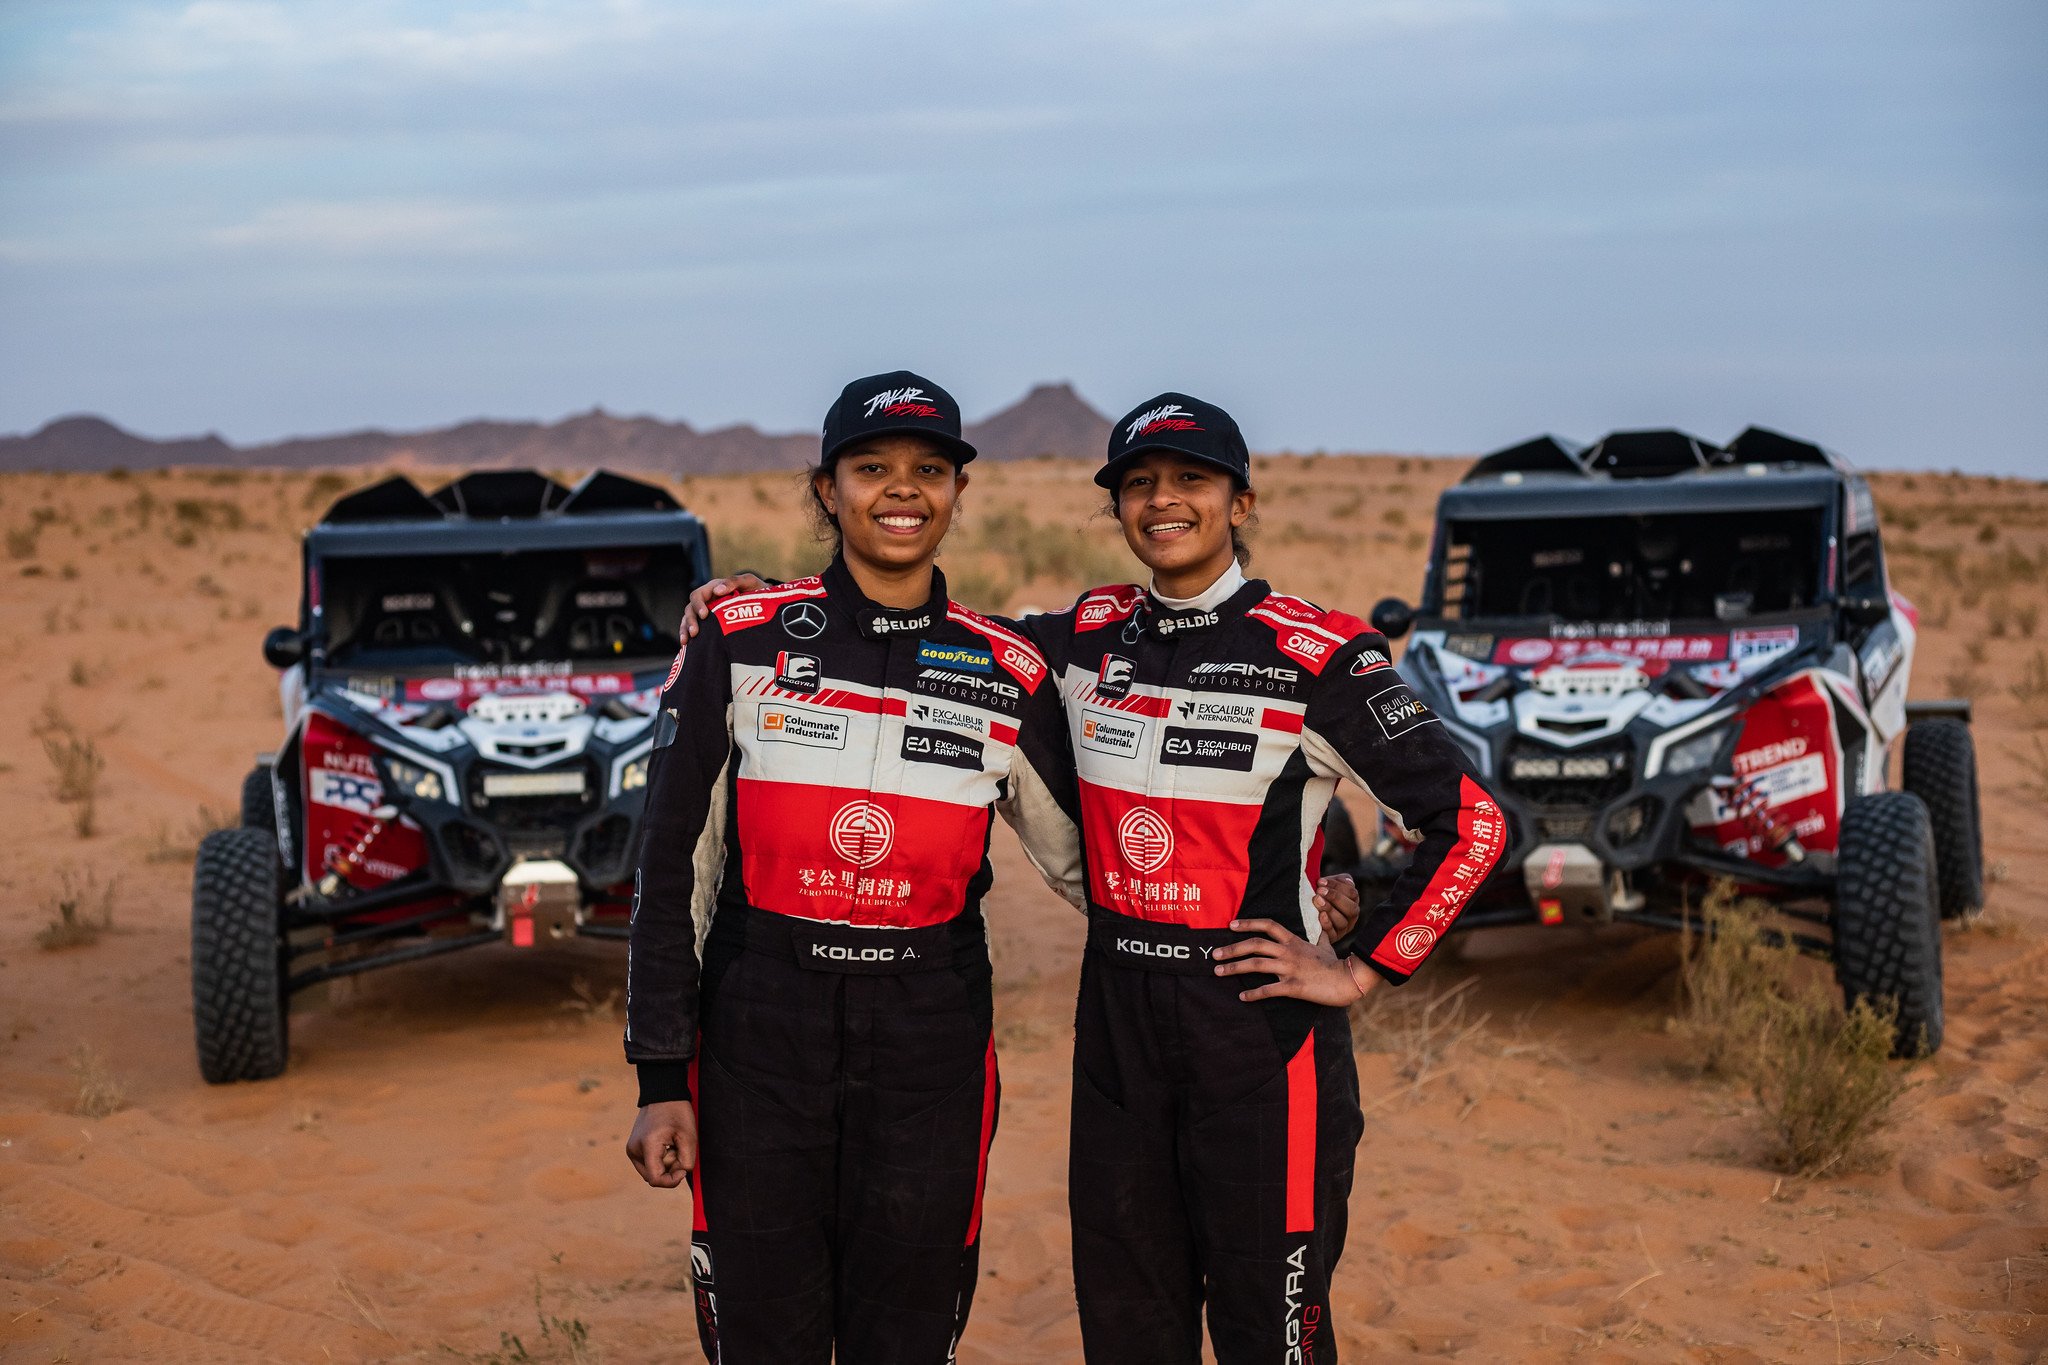 Koloc sisters will race in the 2022 Baja Jordan event on February 17-19.